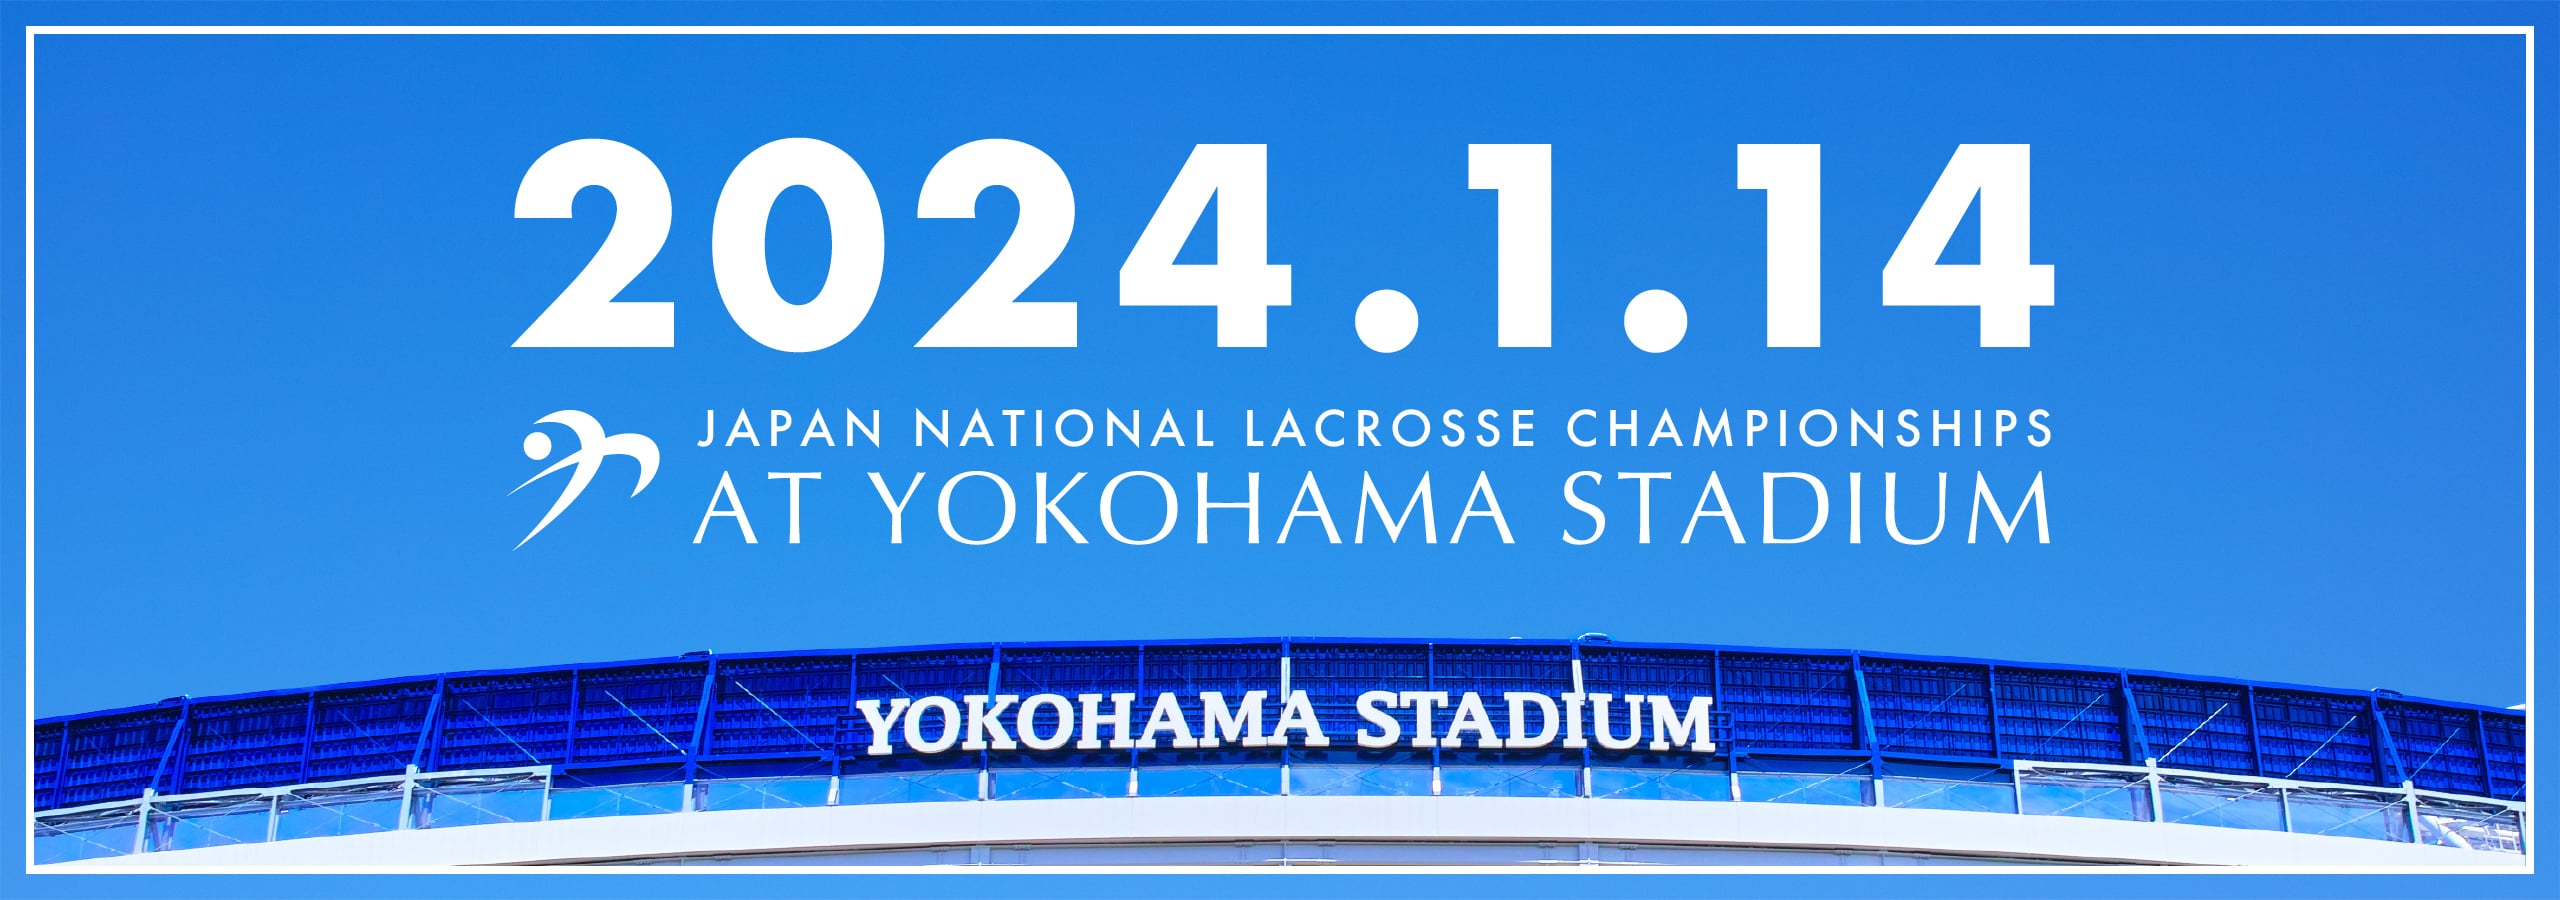 2024.1.14 japan national lacrosse championships at yokohama stadium